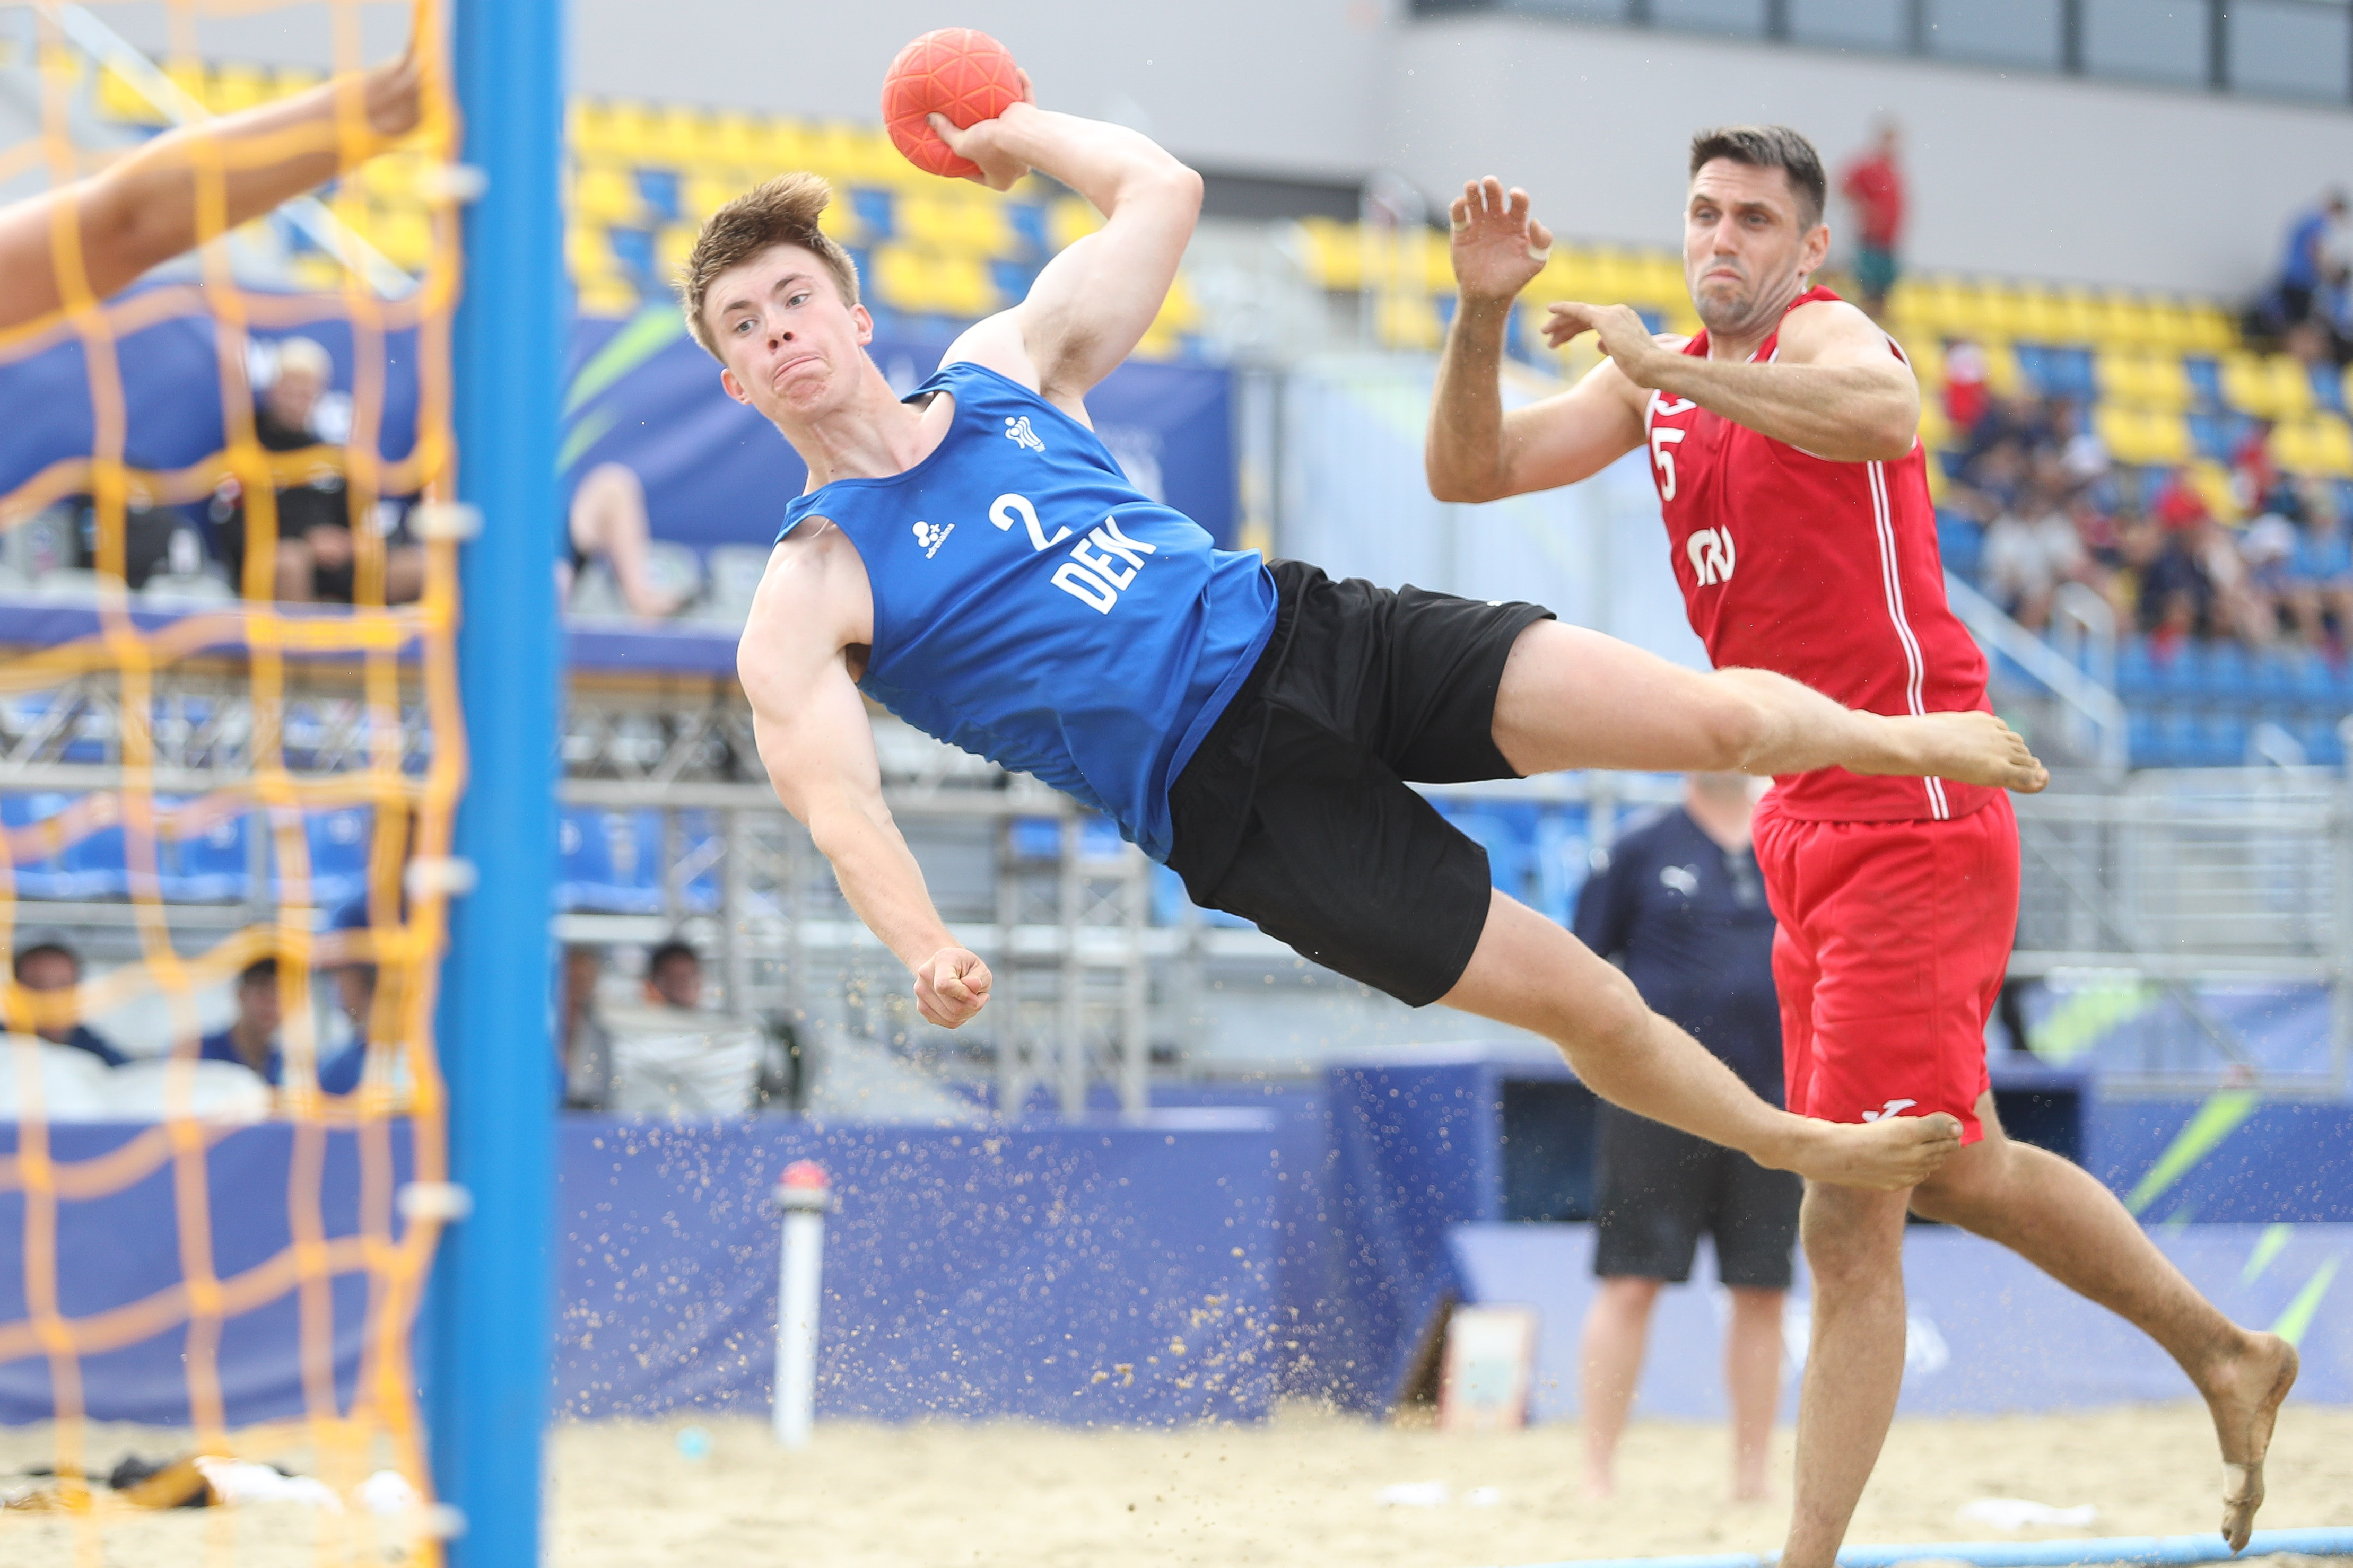 Huge drama in men’s beach handball quarter-finals